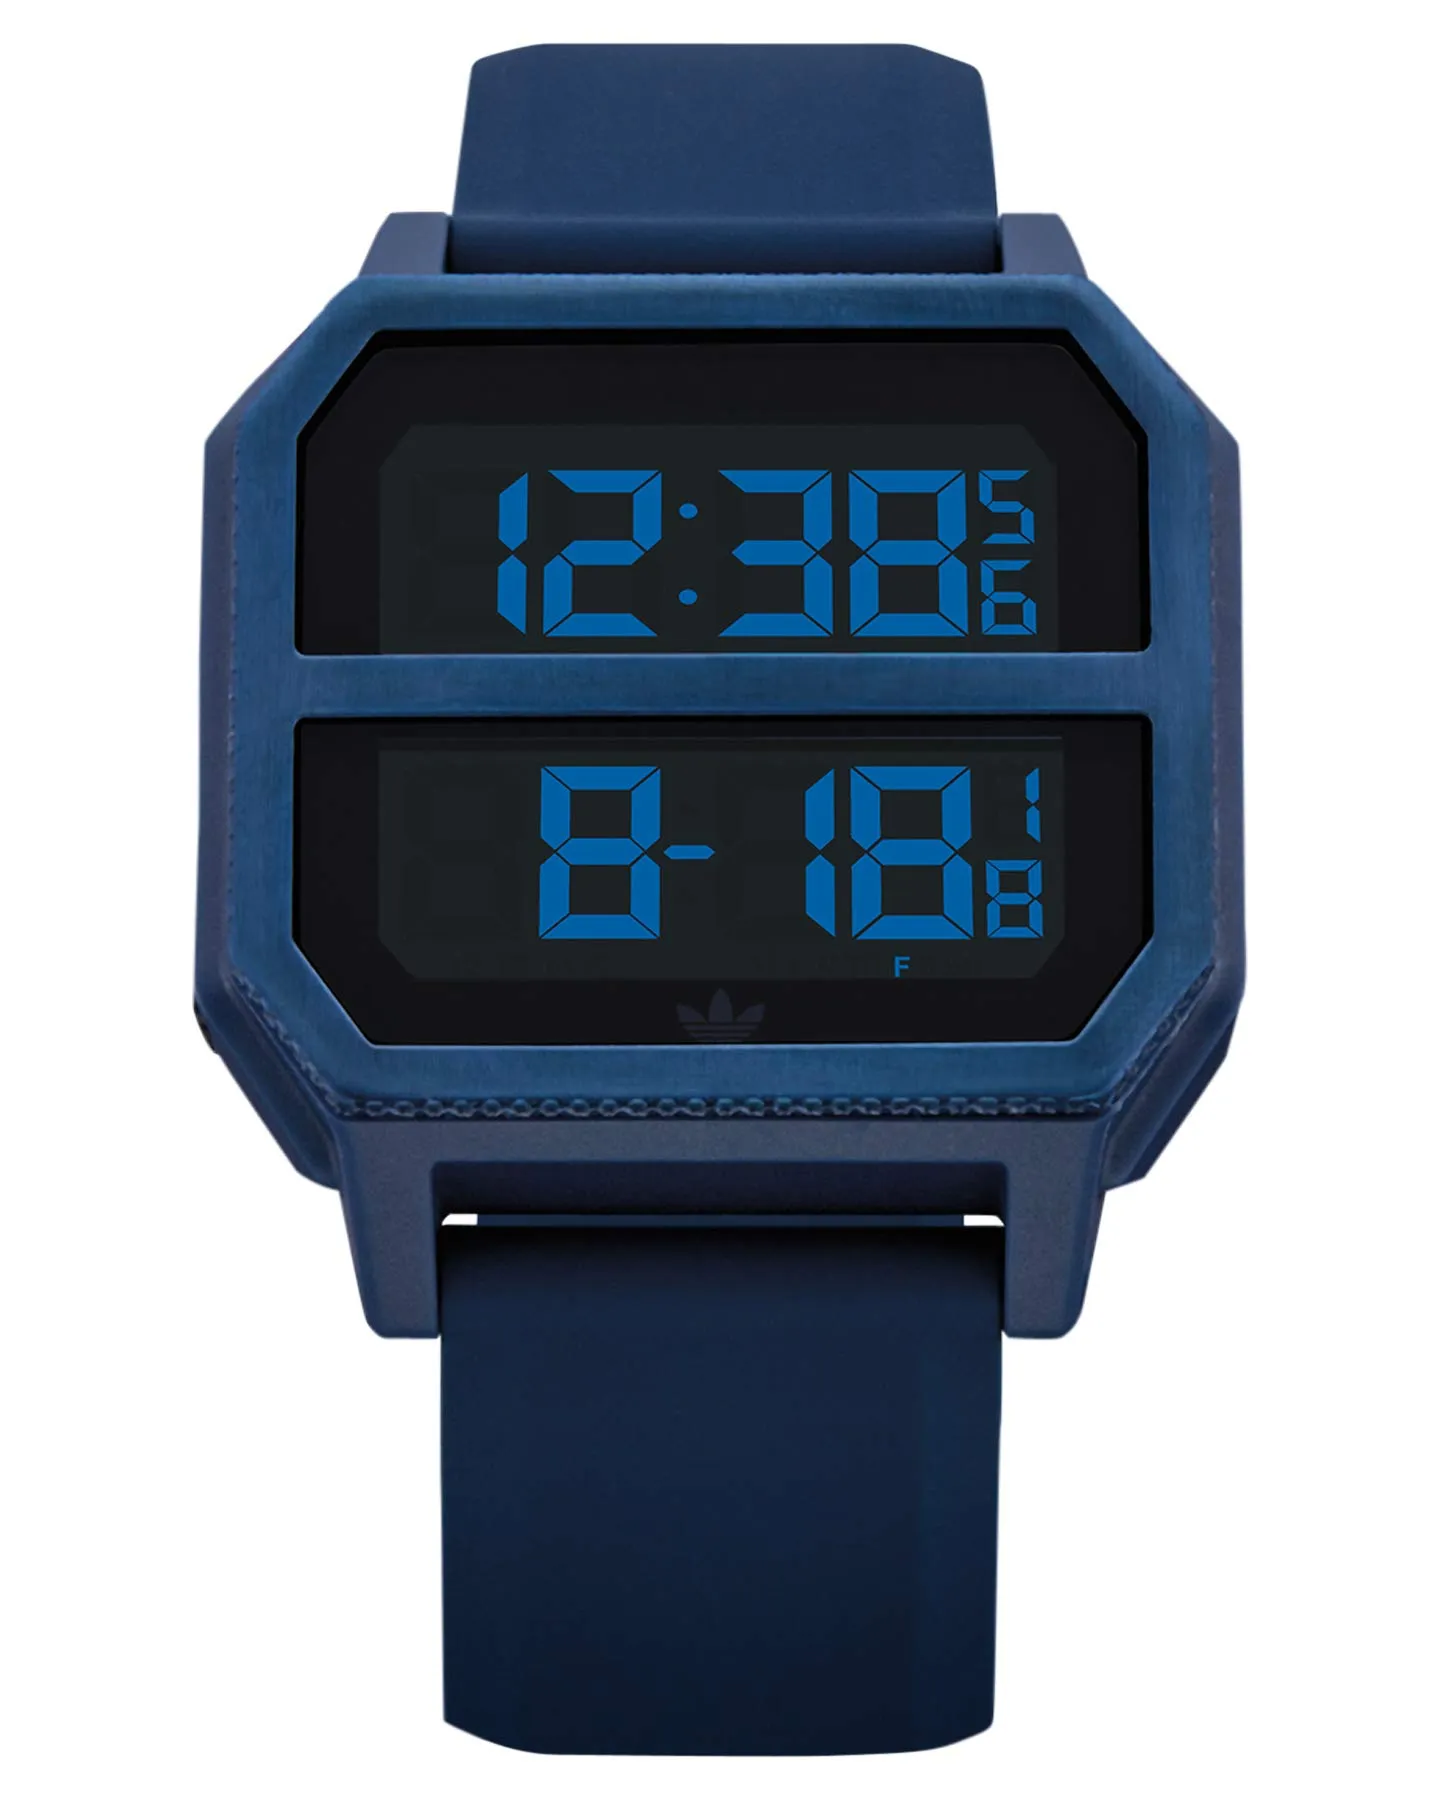 Adidas Men s Archive R2 Z16 605-00 Blue Silicone Quartz Fashion Watch